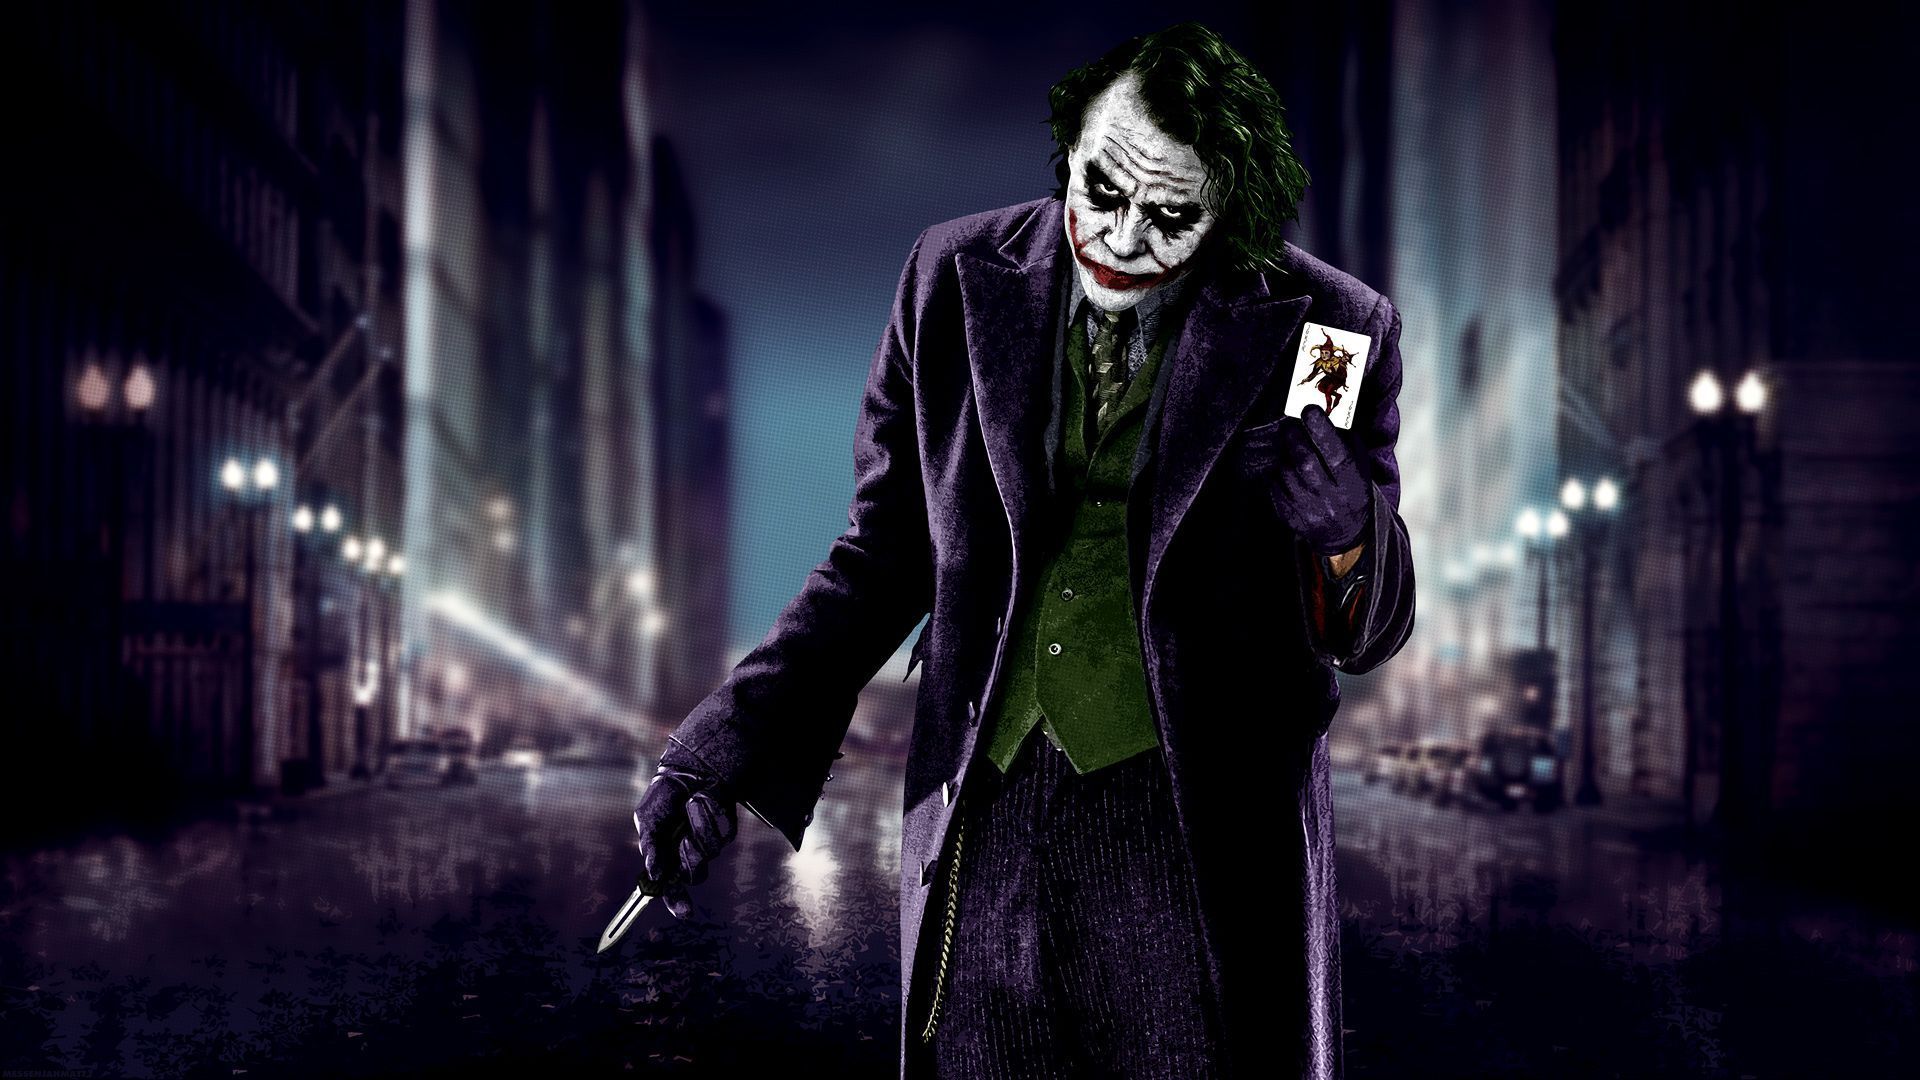 Joker All The Way Wallpapers